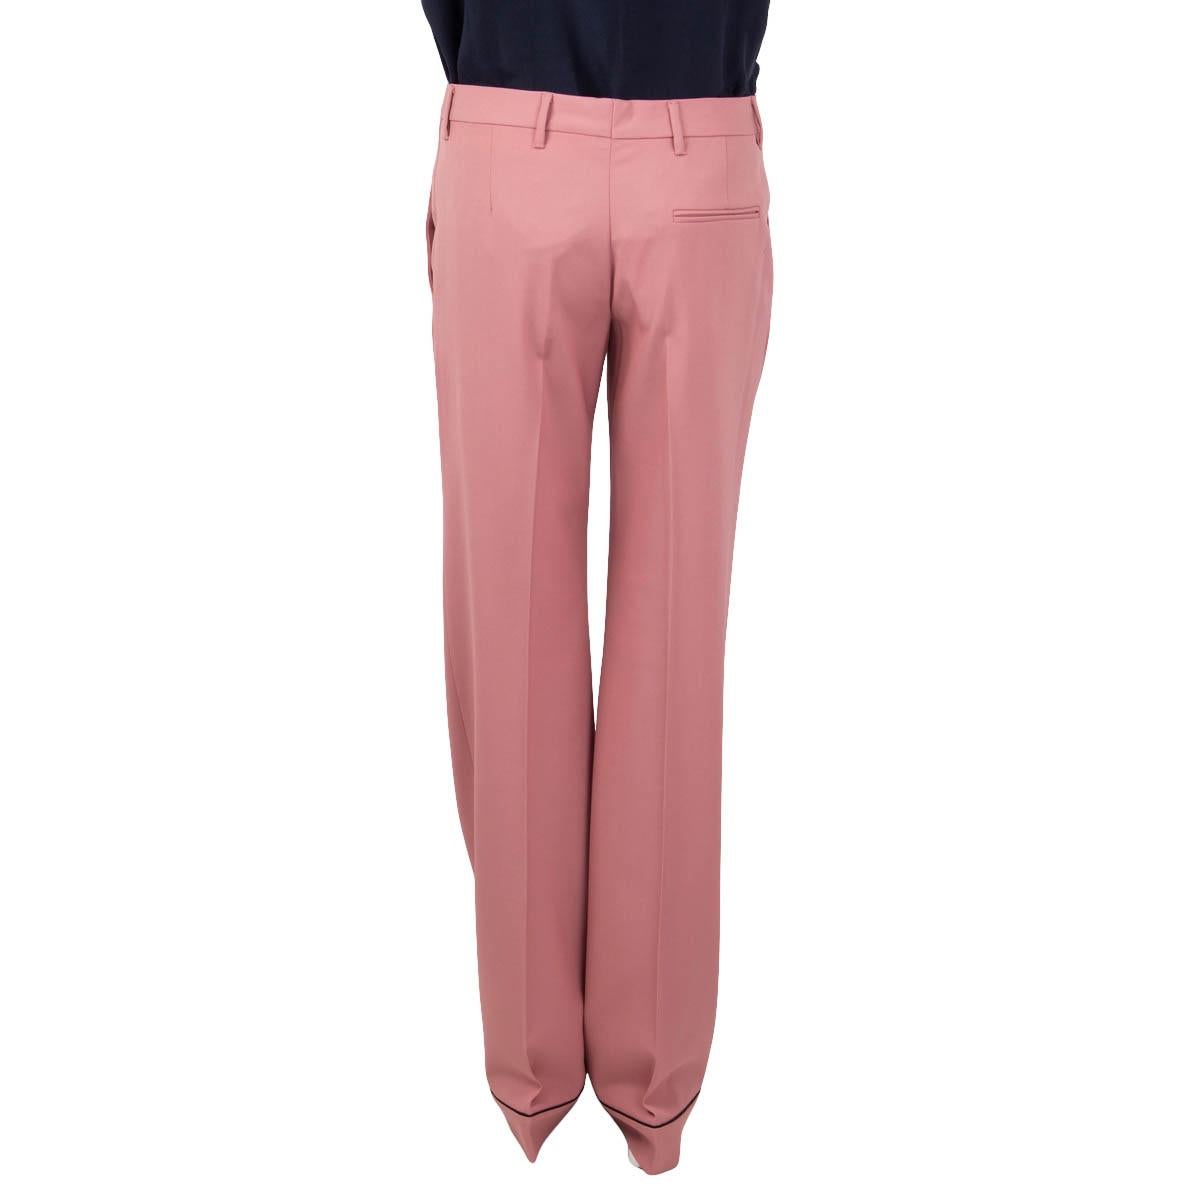 pink stretch pants